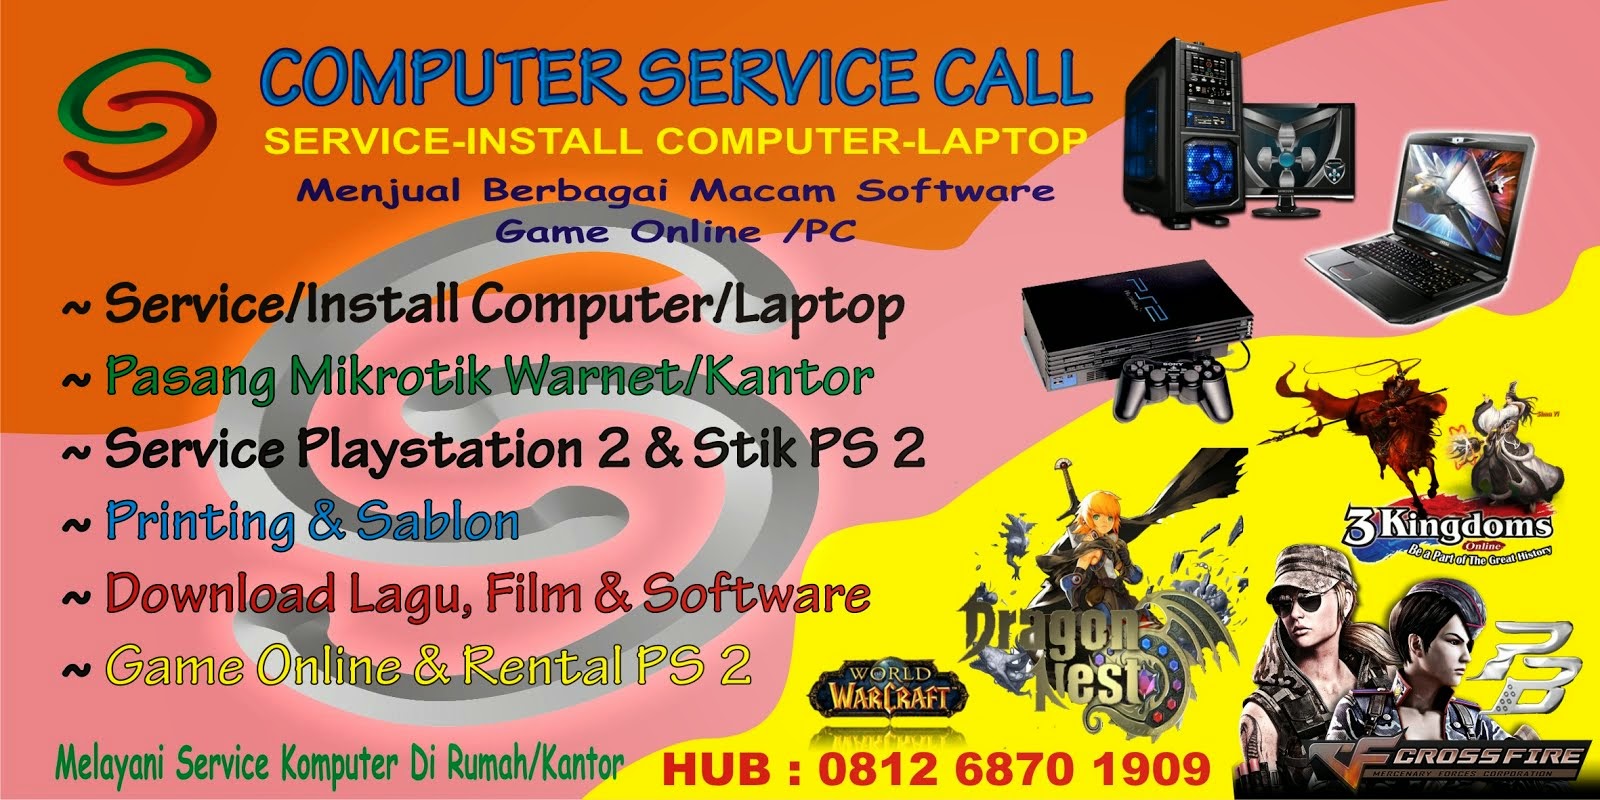 Computer Service Call